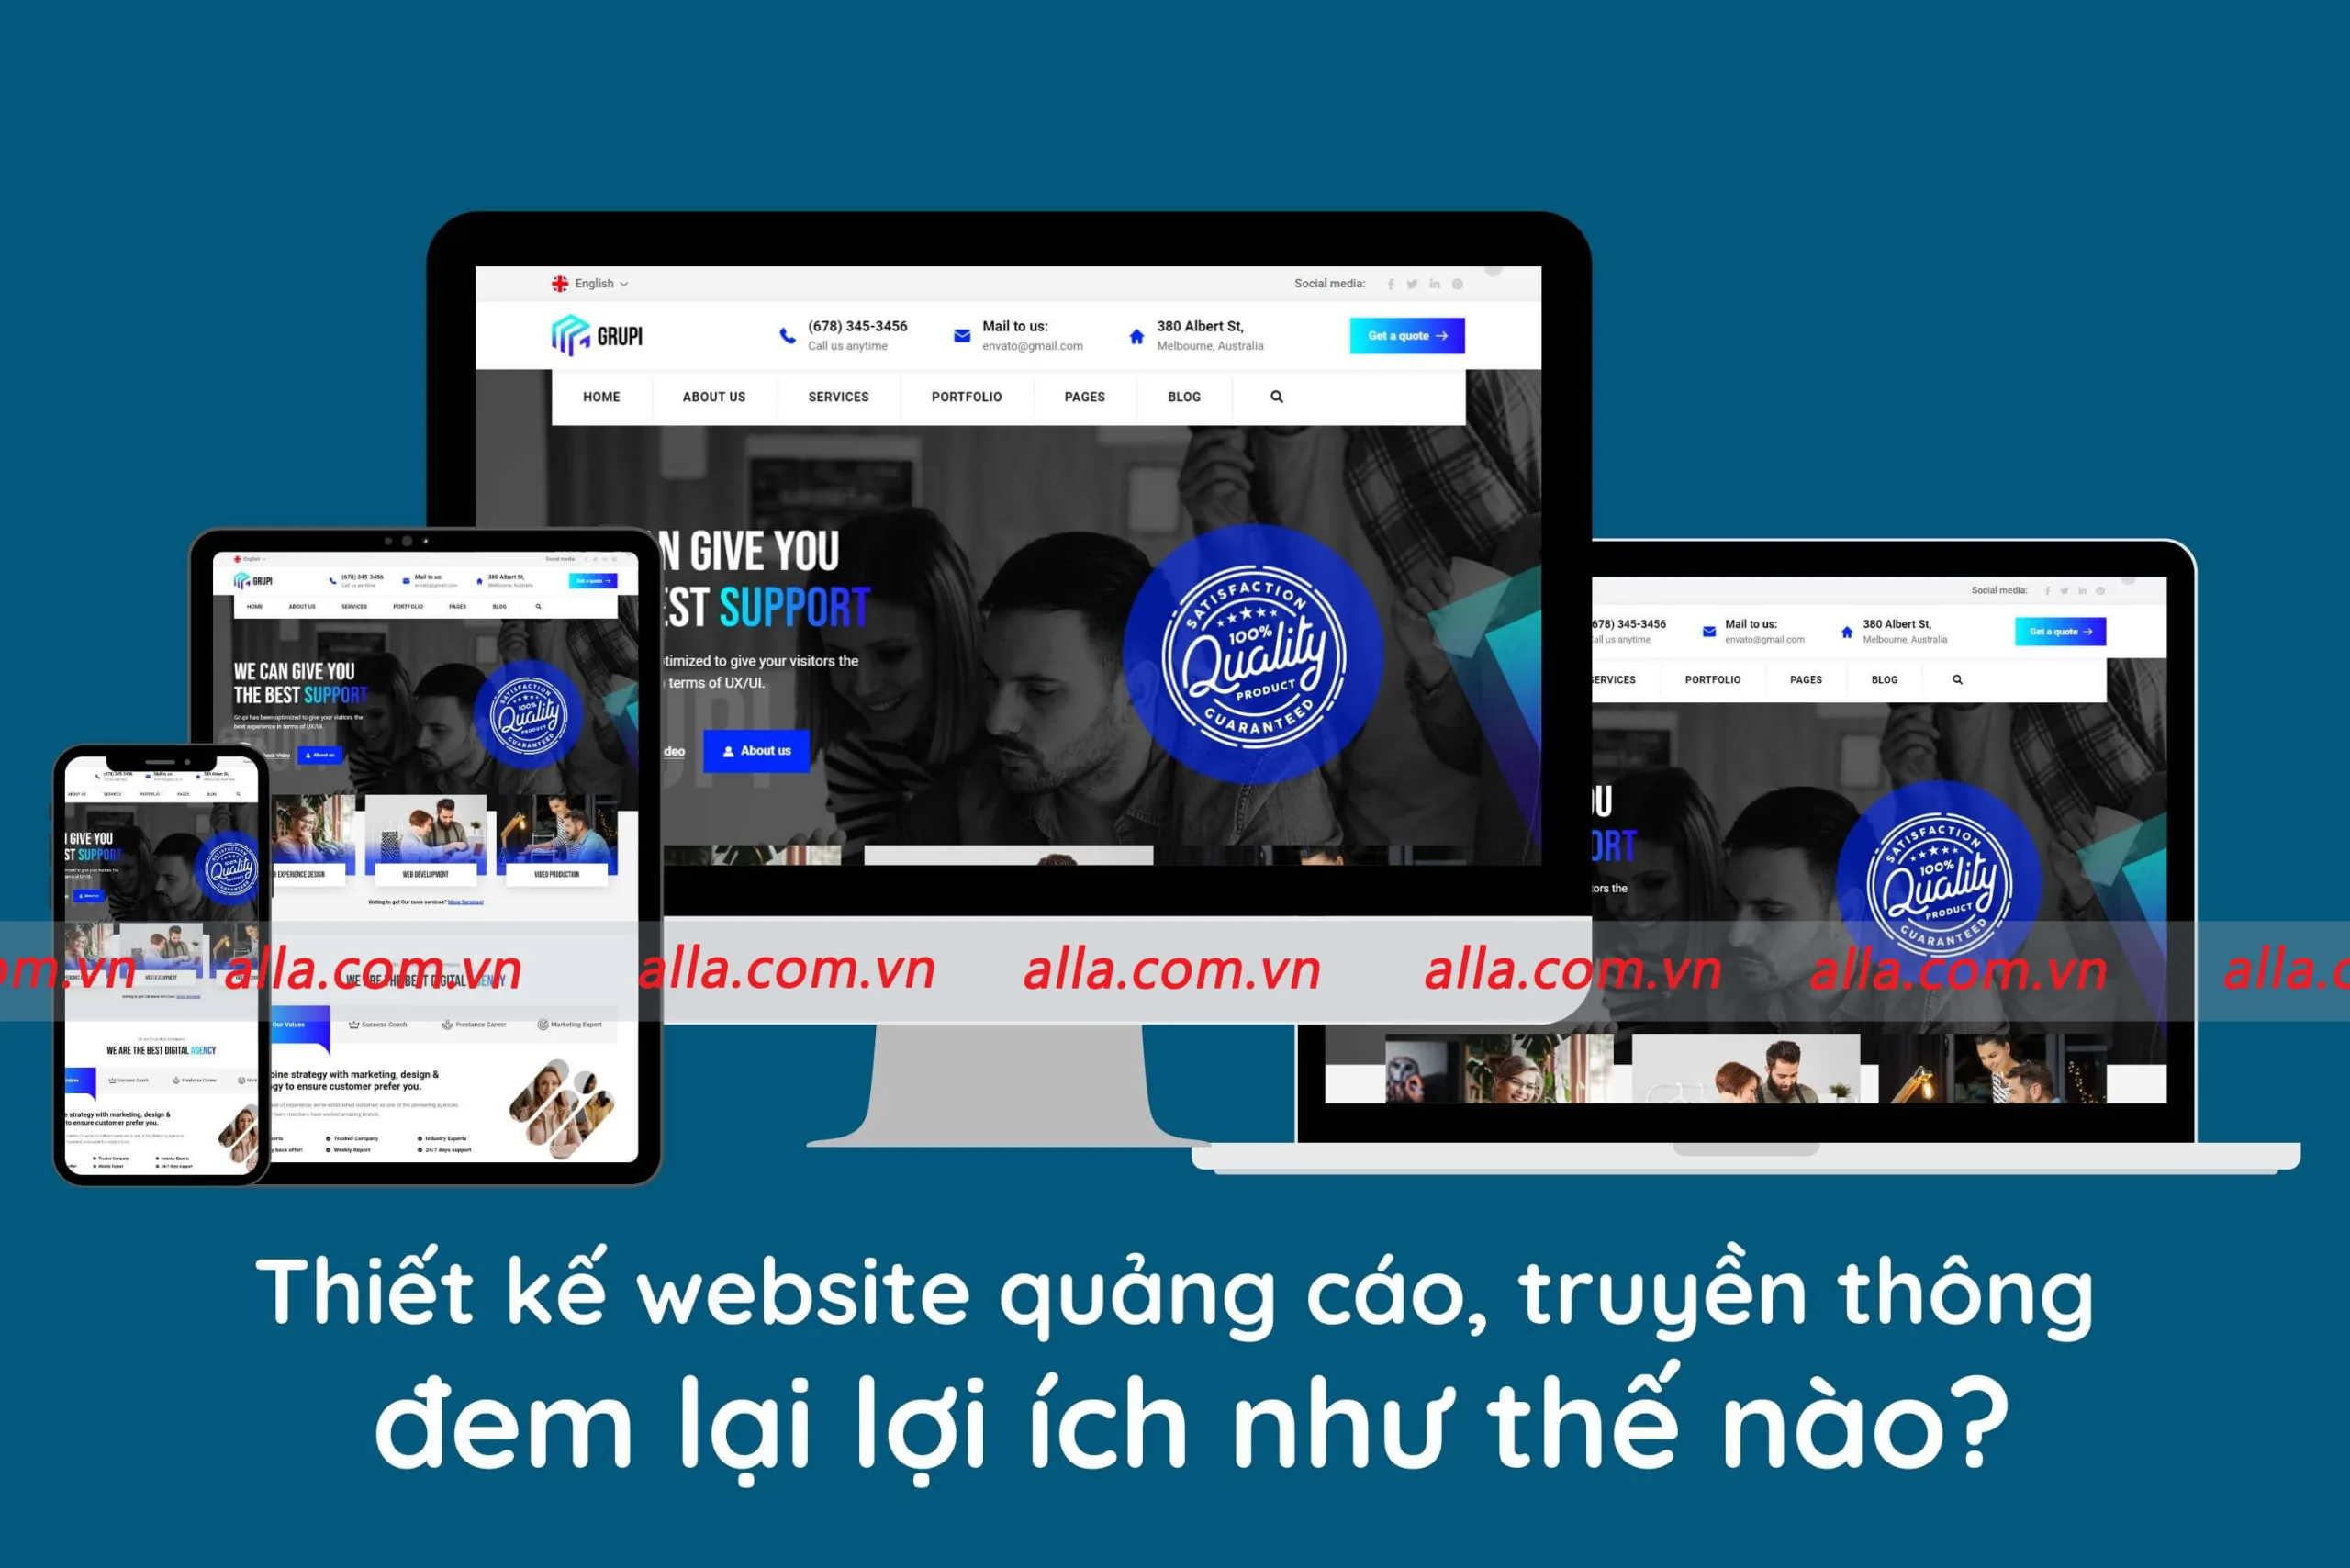 loi-ich-khi-thiet-ke-website-truyen-thong-chuyen-nghiep